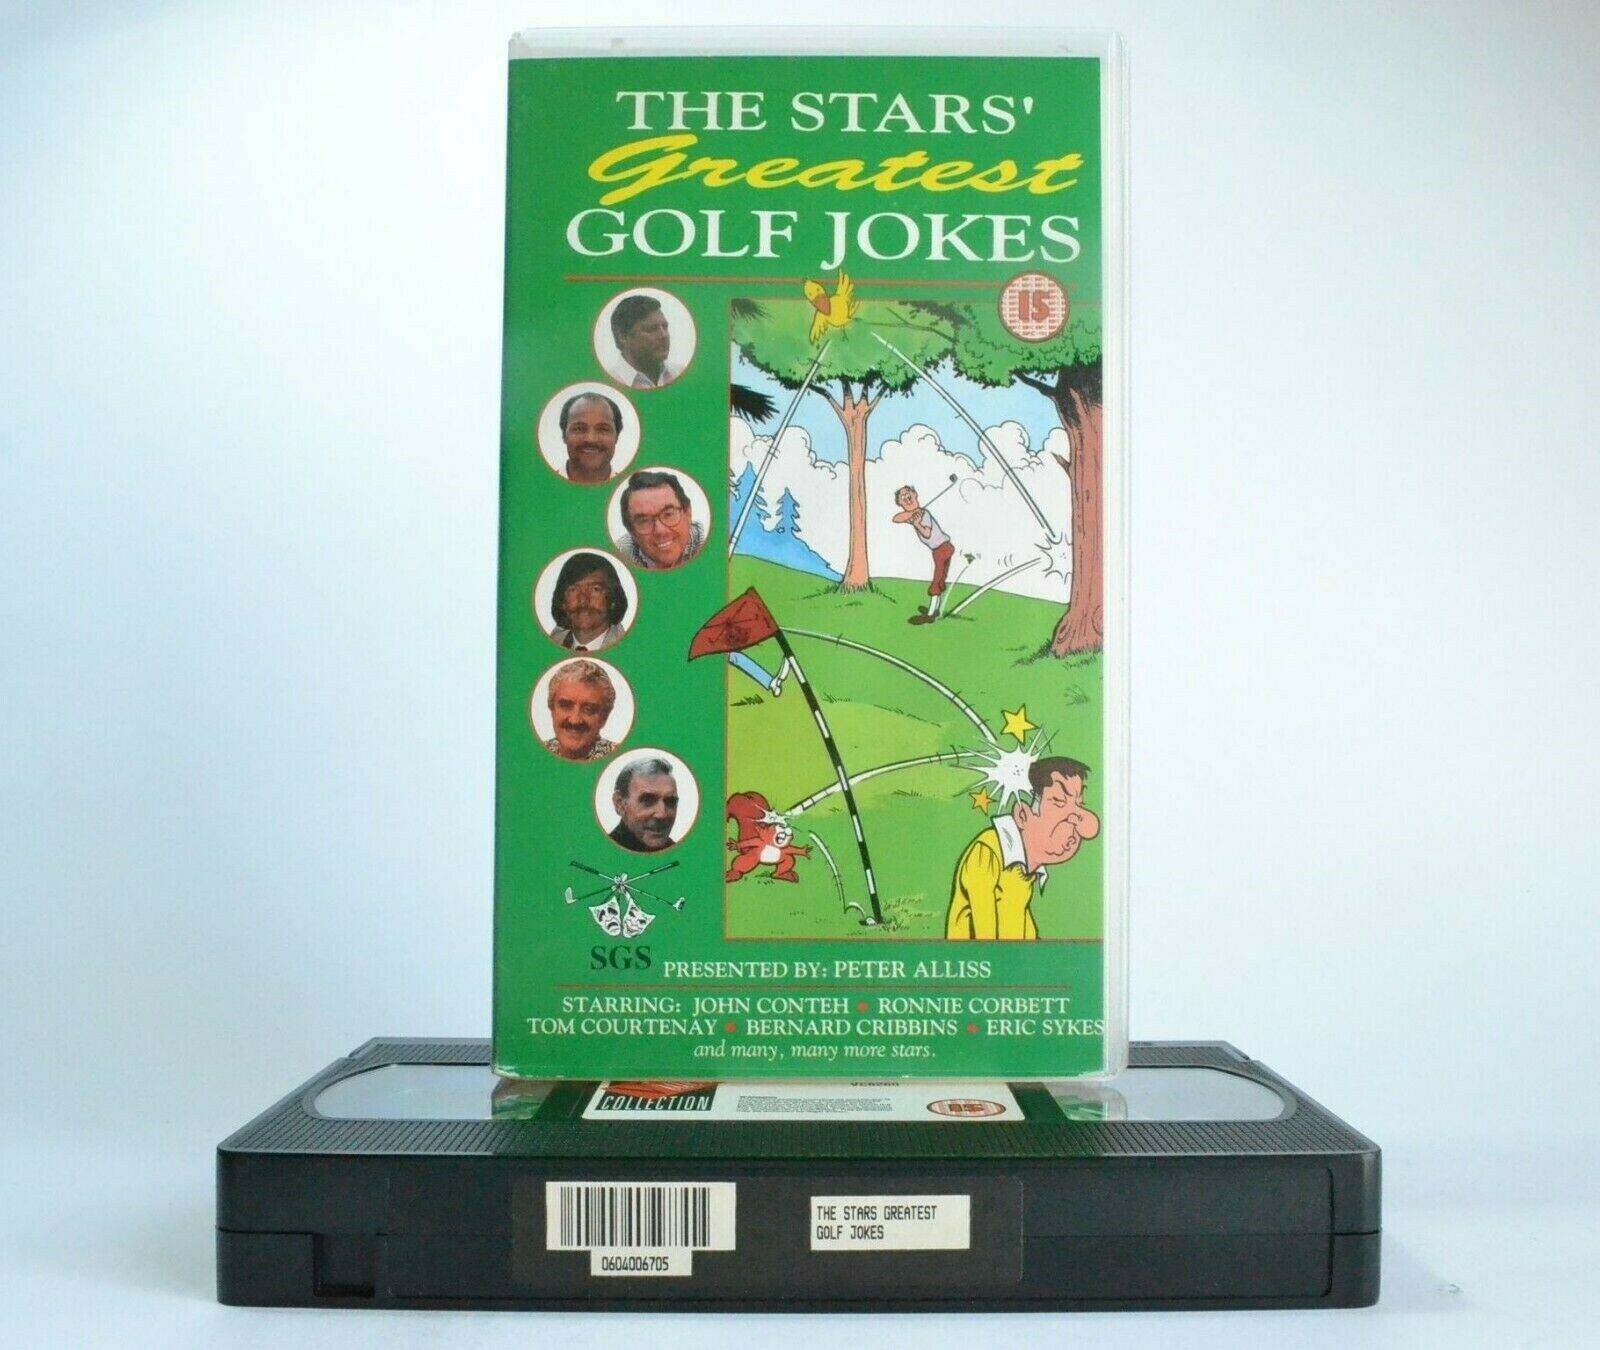 The Stars' Greatest Golf Jokes: By Peter Alliss - John Conteh - Eric Sykes - VHS-